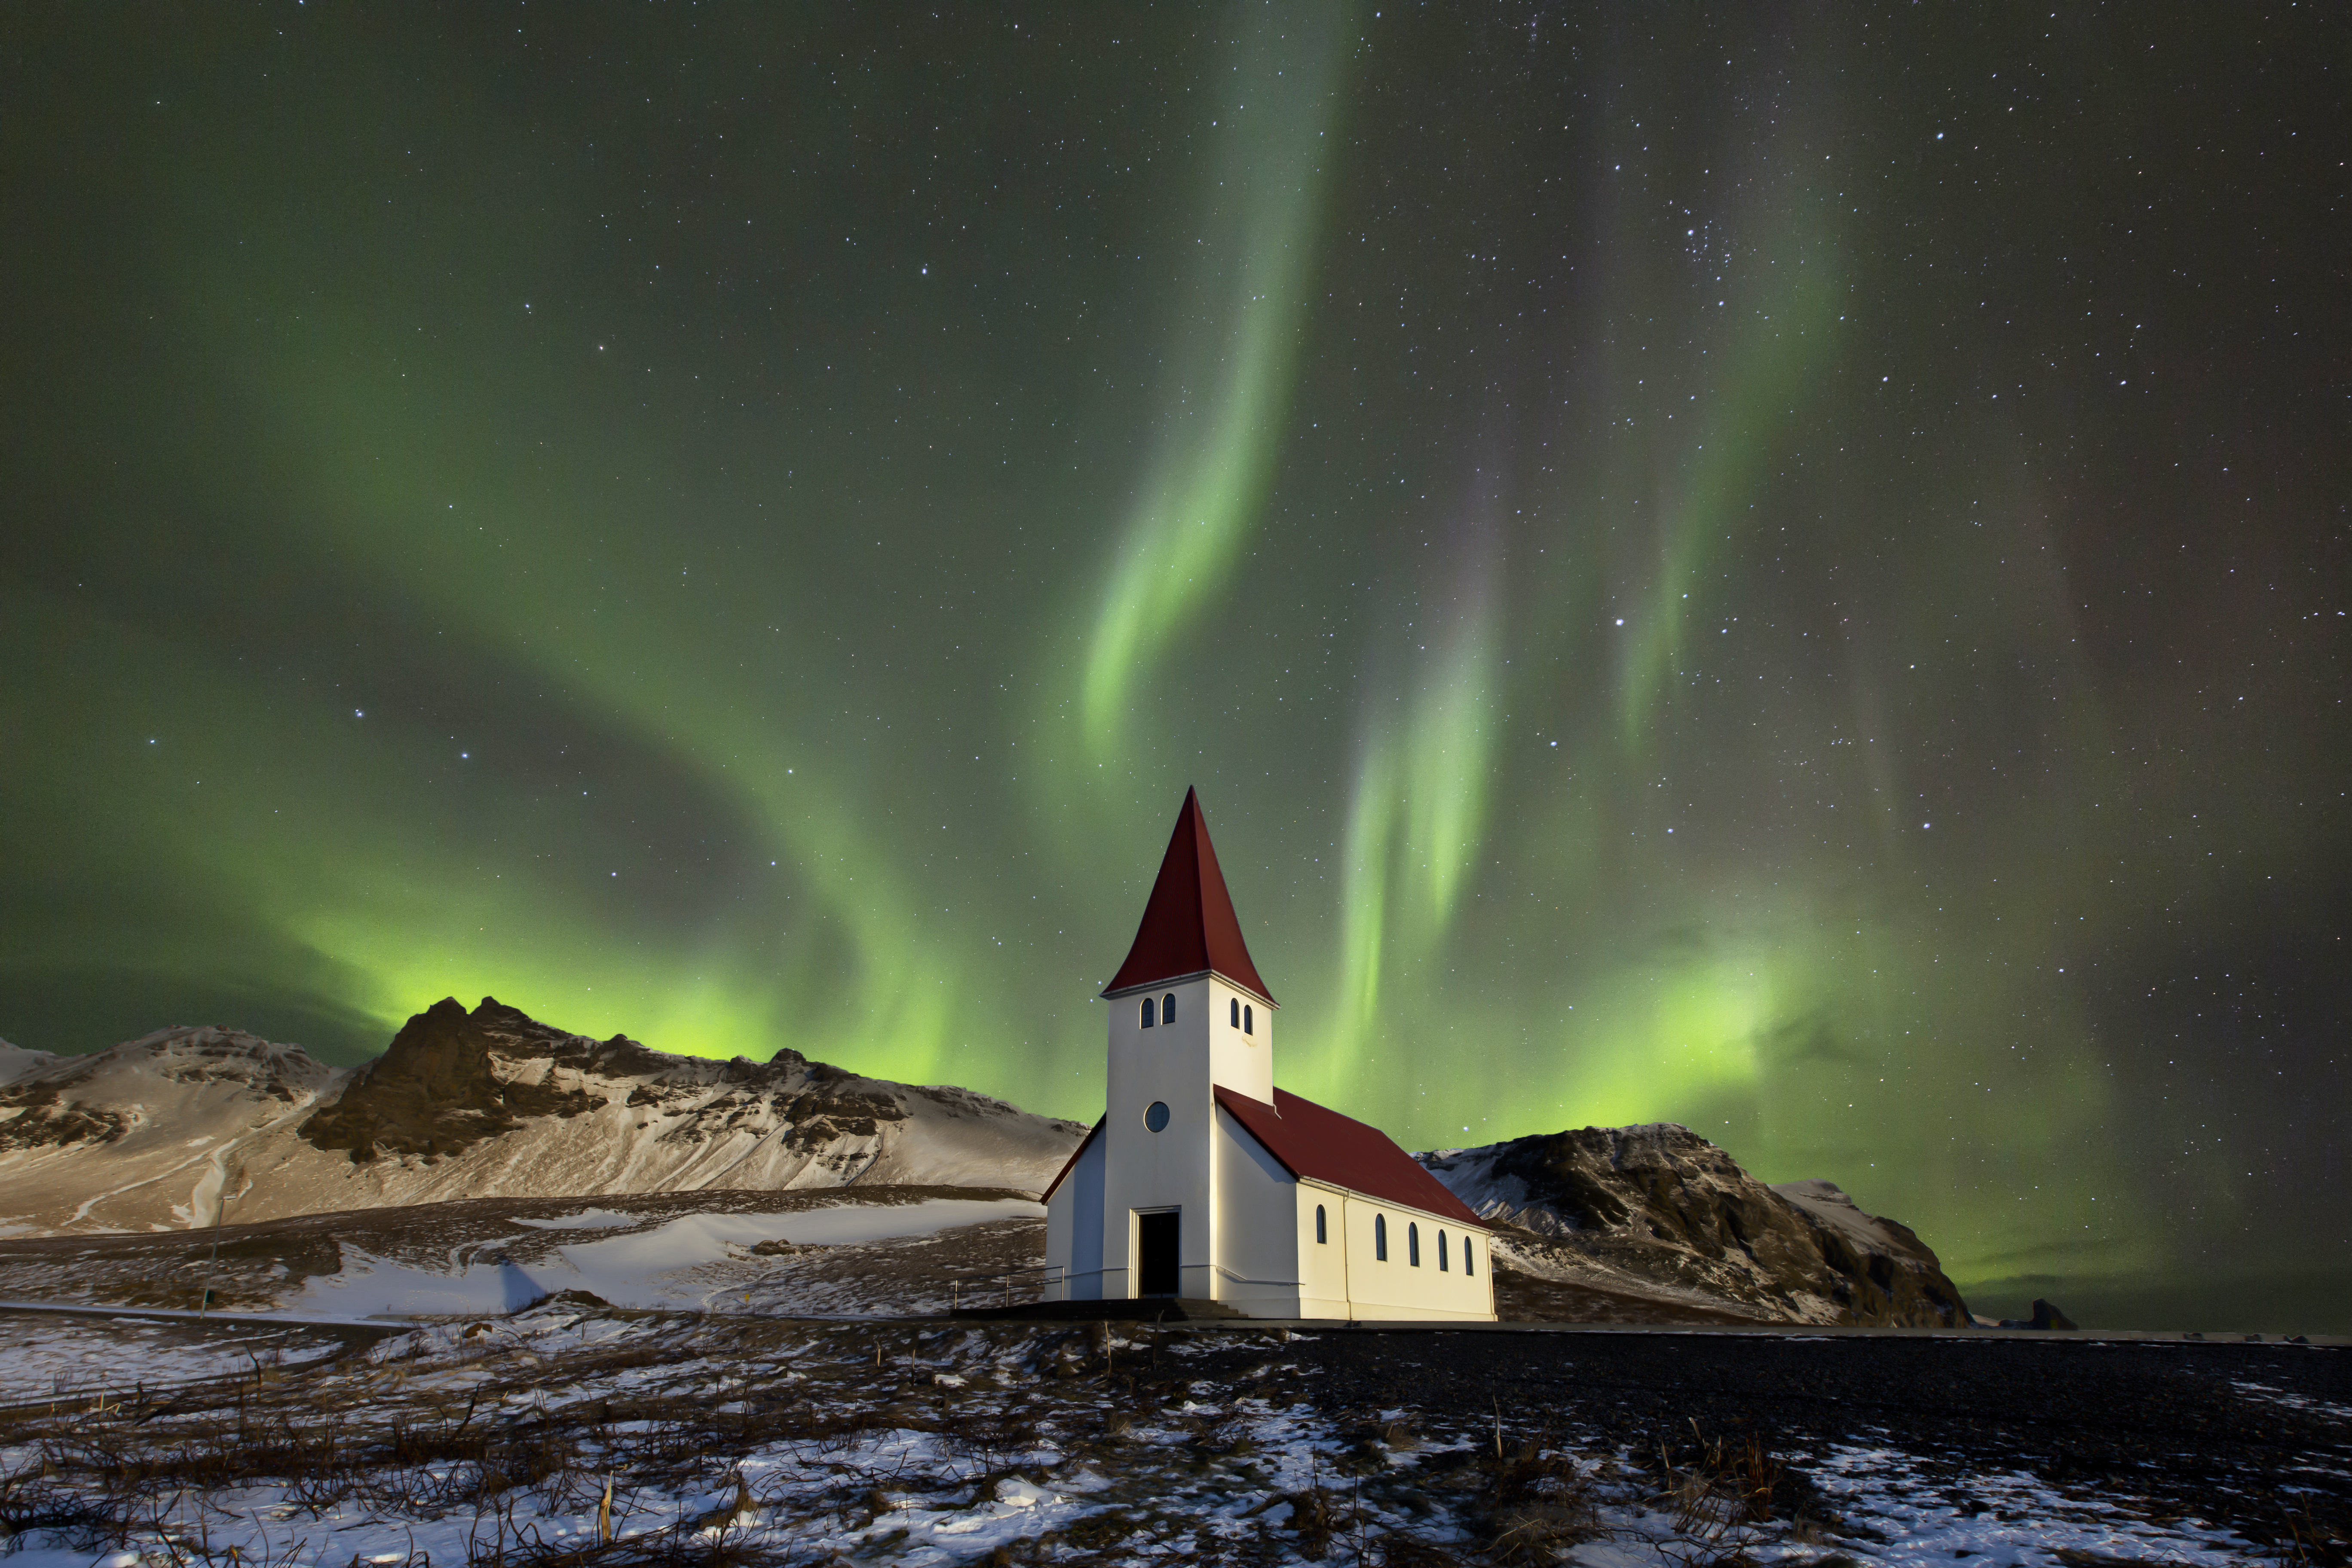 Northern lights (Aurora borealis) over the Víkurkirkja church at Vík í Mýrdal, Iceland by AstroAnthony